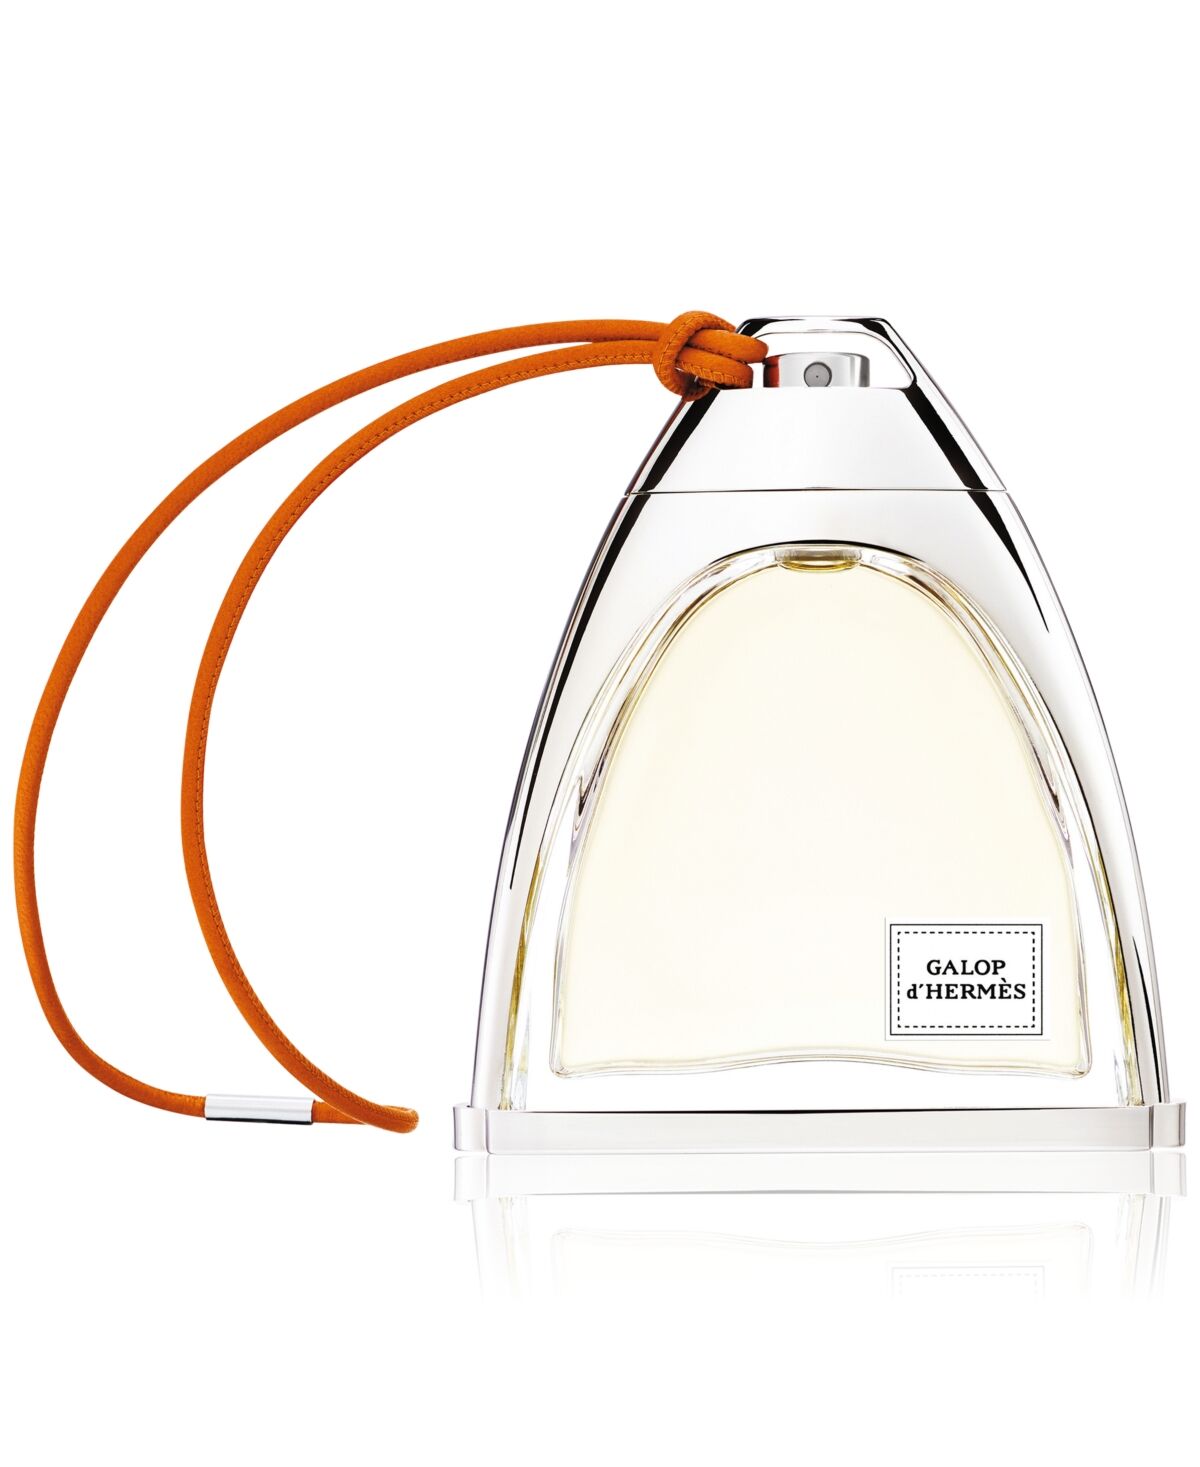 HERMES Galop d'Hermes Pure Perfume, 1.7-oz.